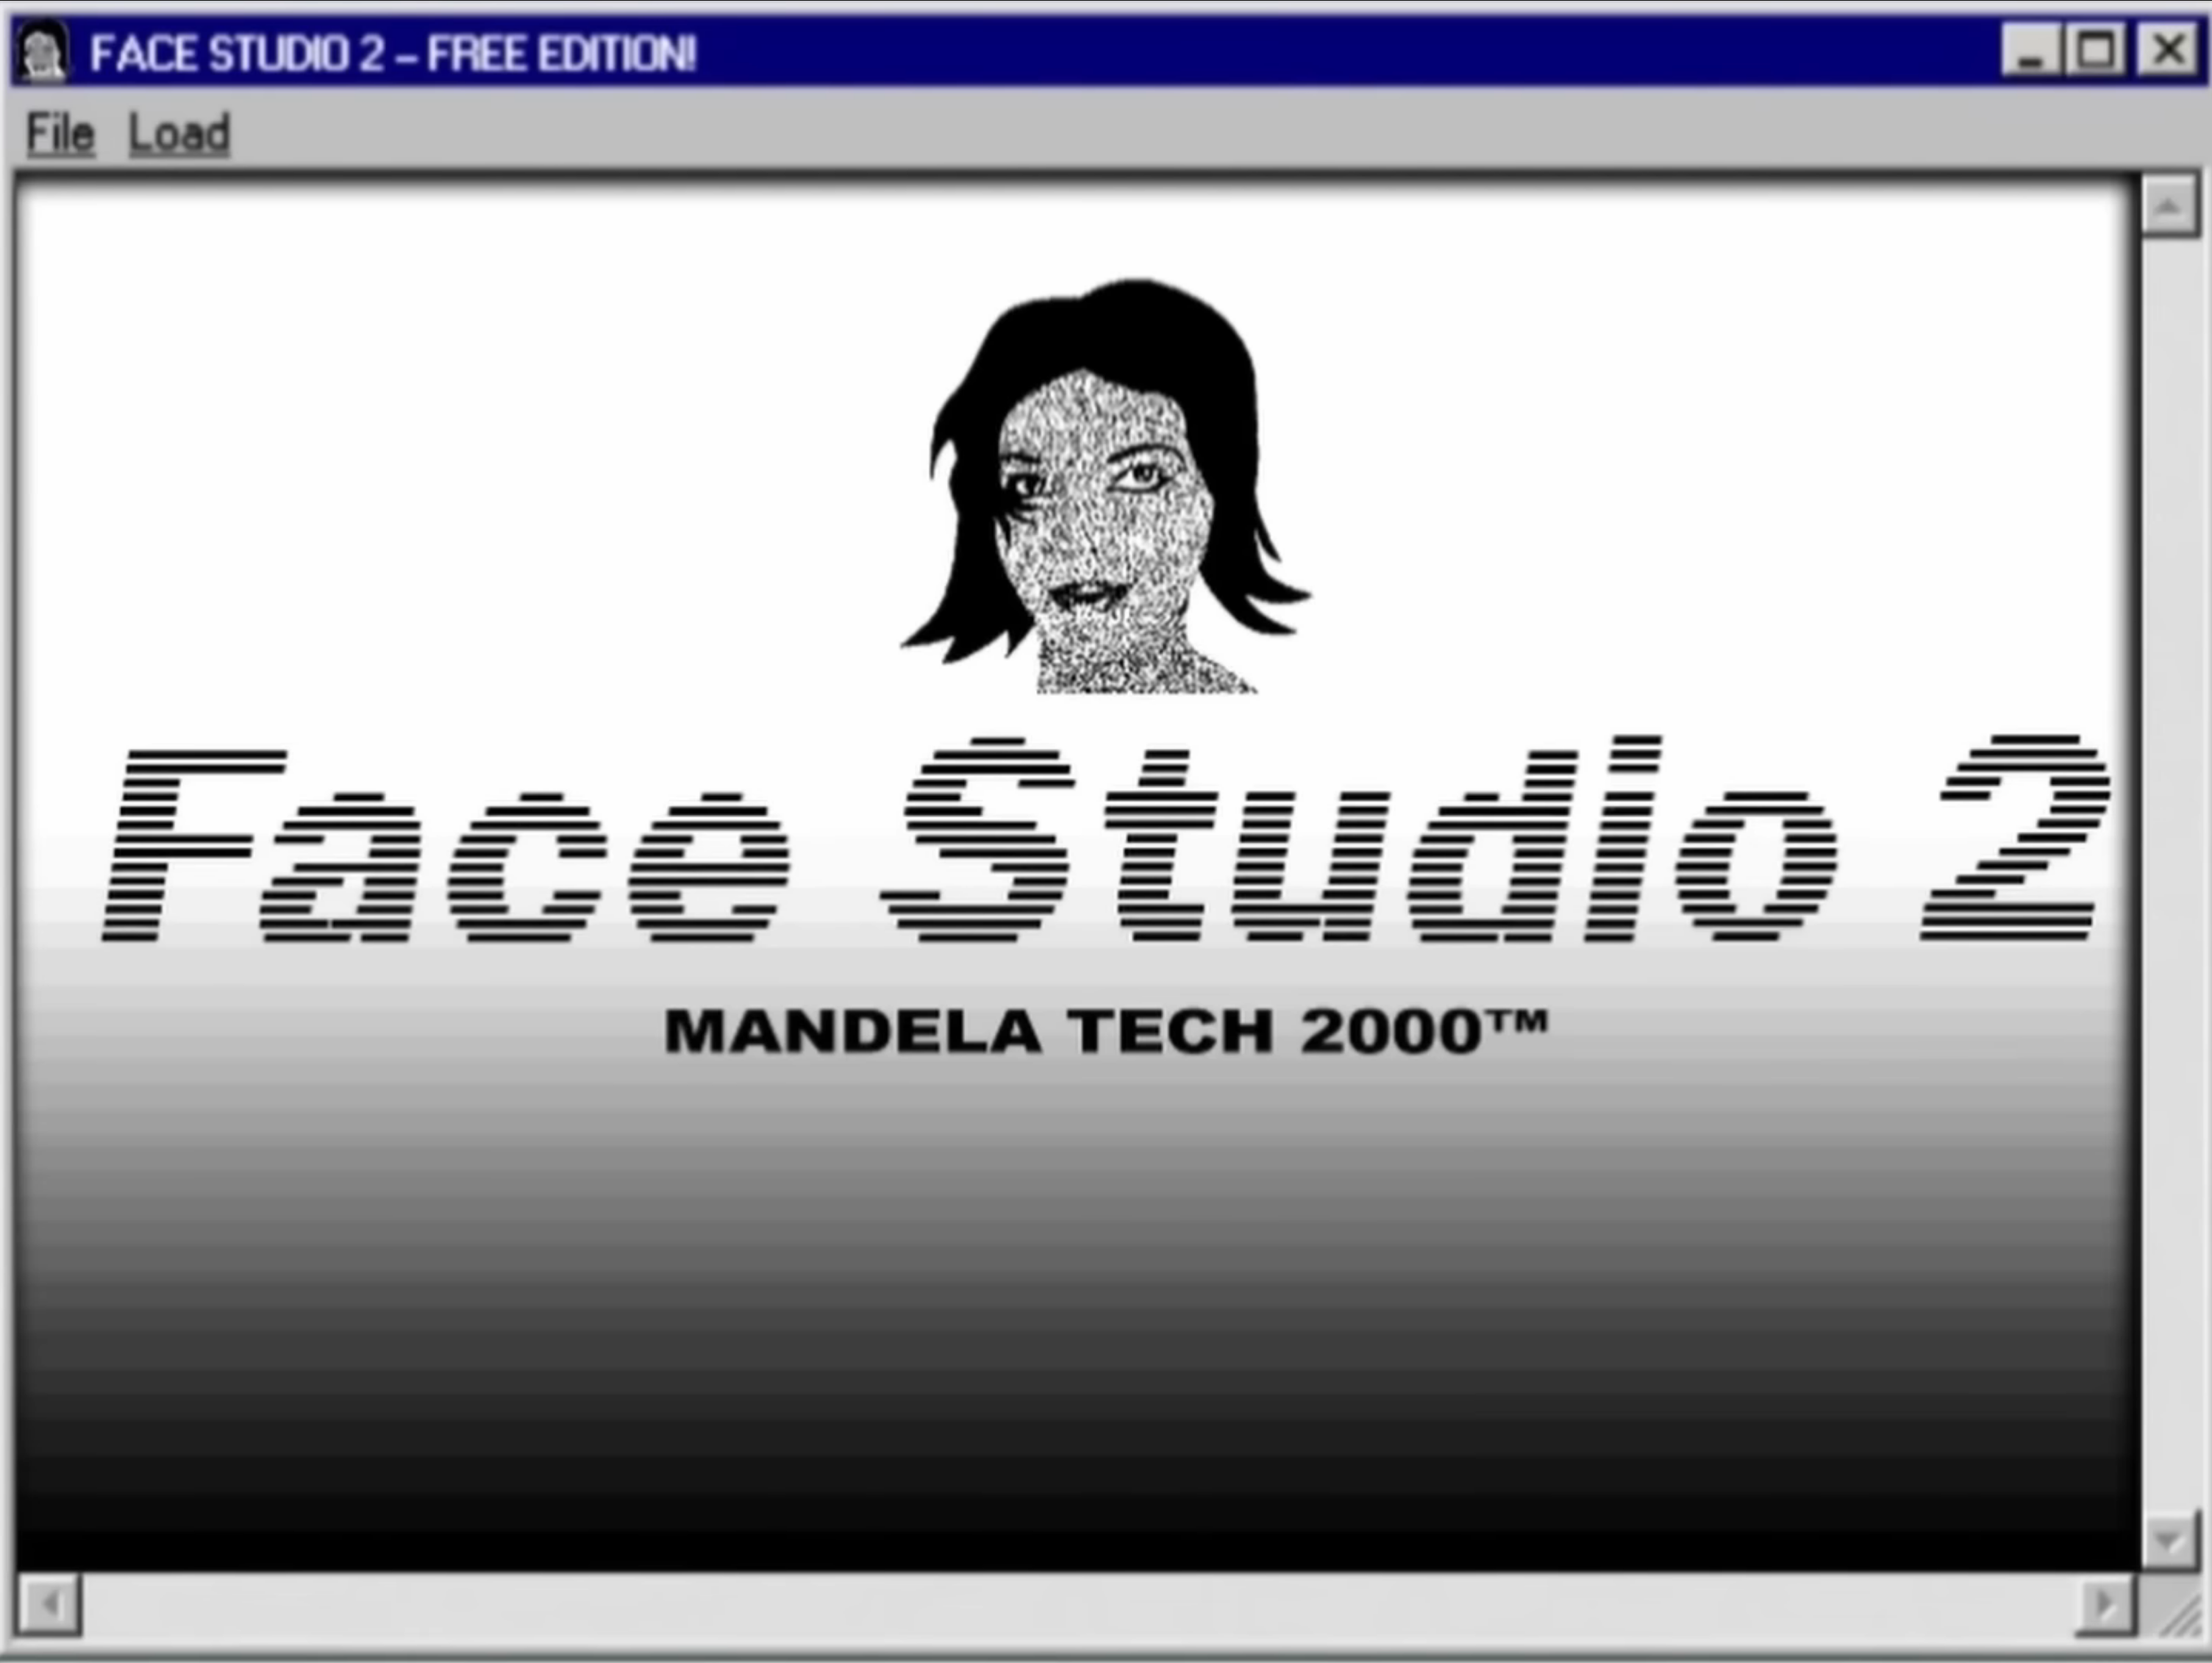 Mandela Catalogue Game Play Free Online